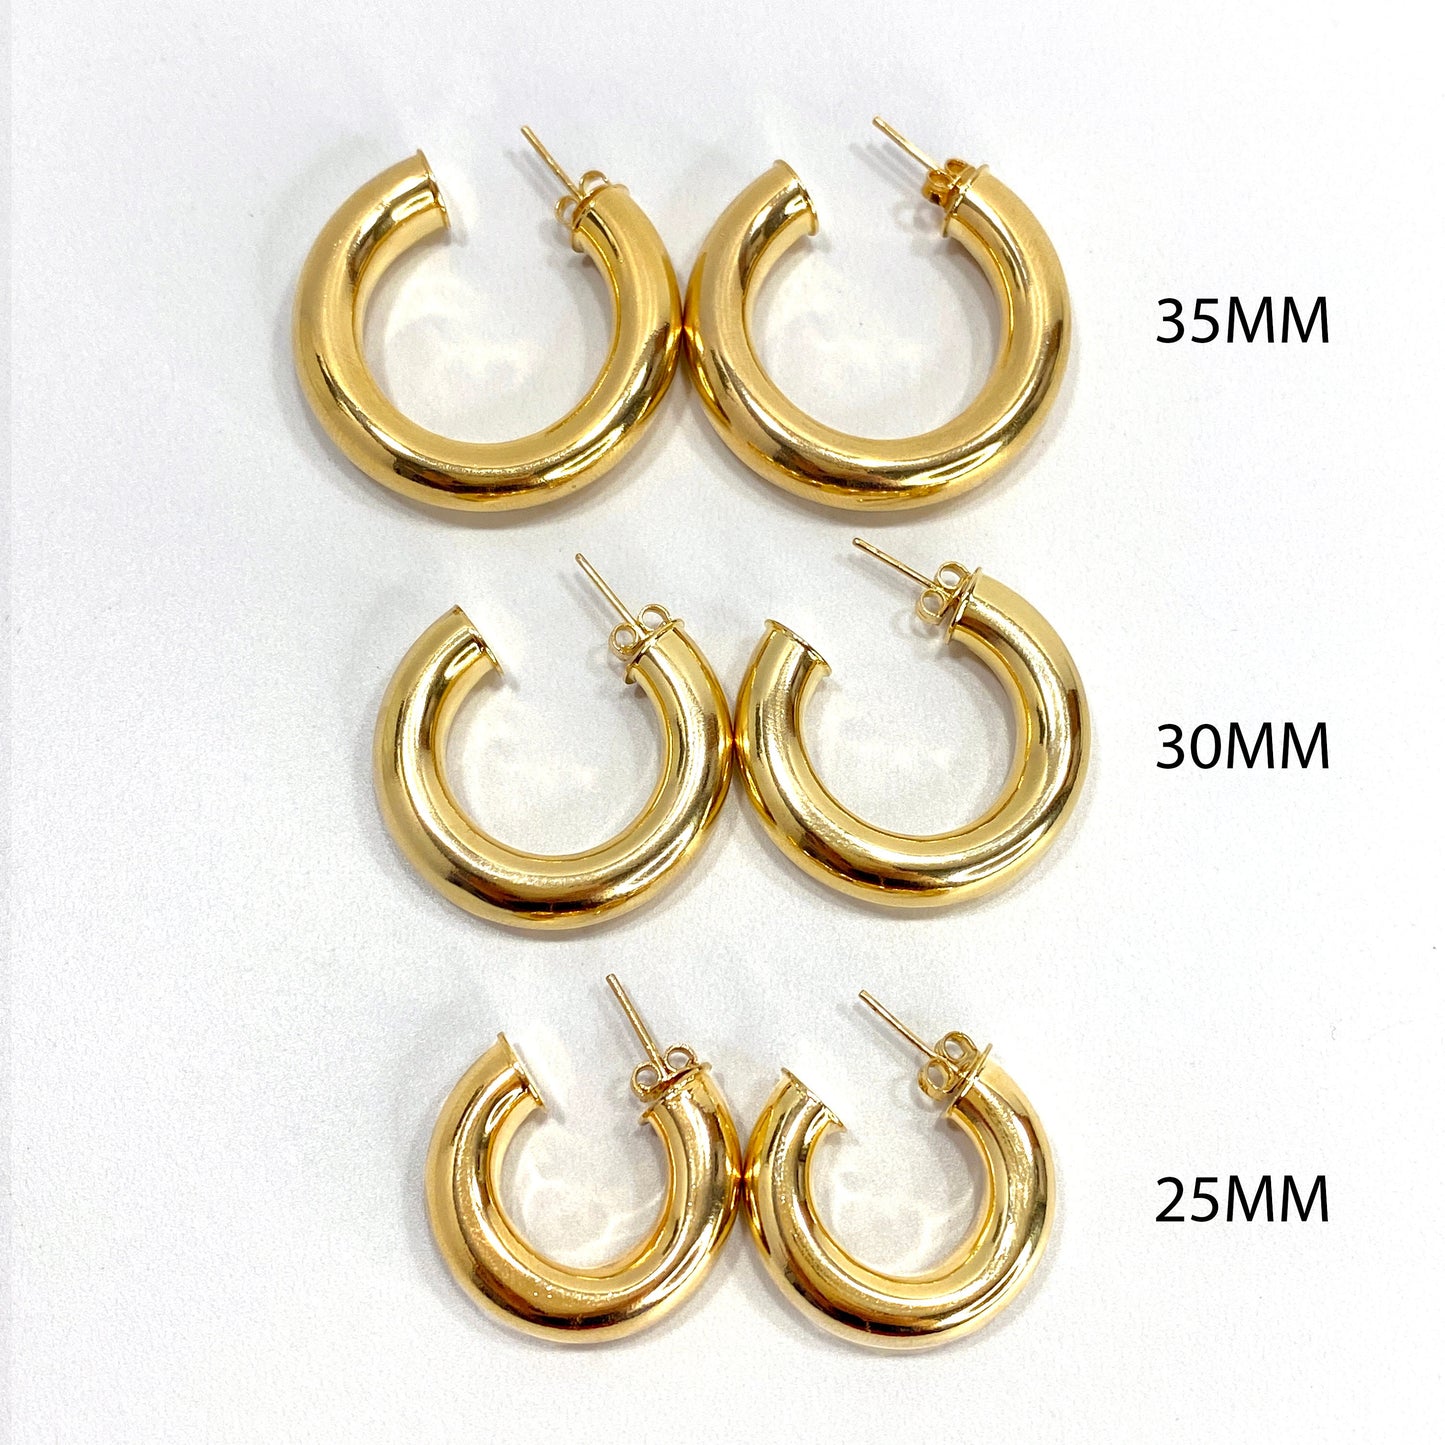 18k Gold Filled Donut Tubular Open Hoop Earrings 35mm, 30mm, 25mm, C-Hoops Push Back Closure Wholesale Jewelry Supplies